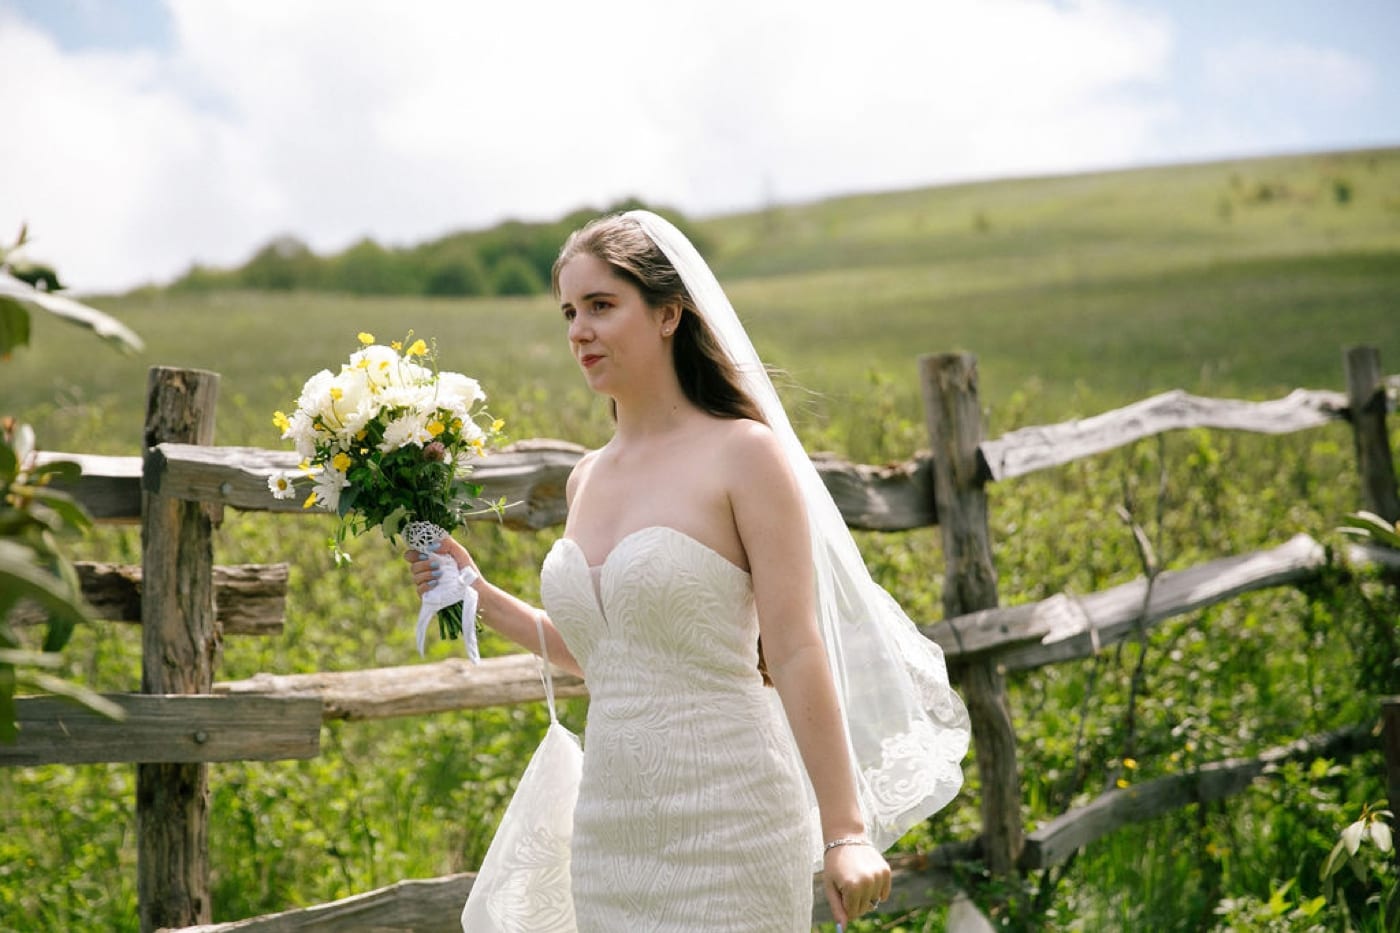 A Bride at Max Patch in North Carolina